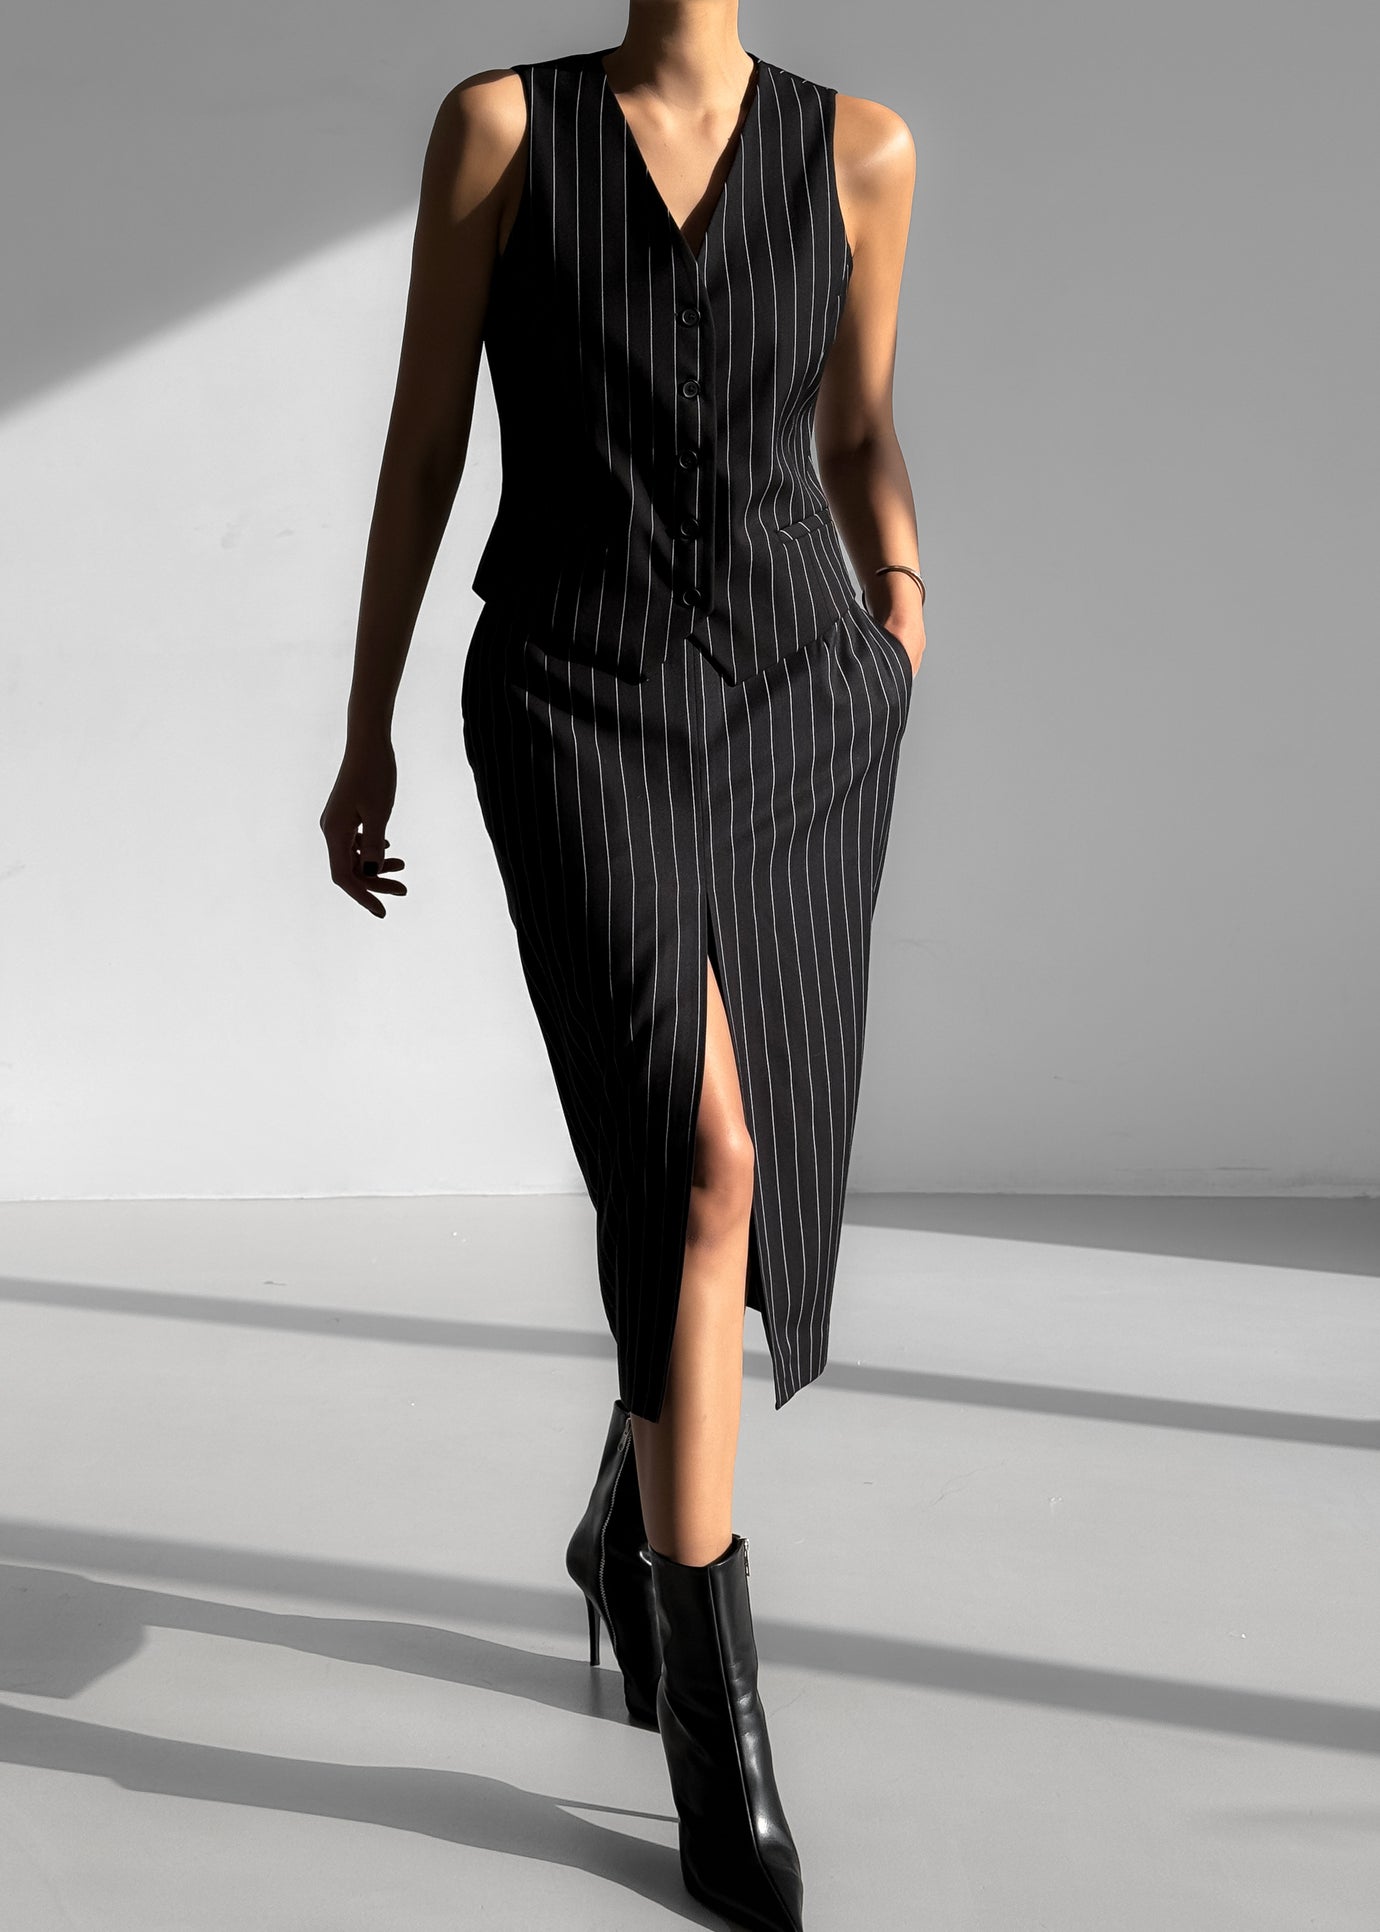 Holland Midi Slit Skirt - Black/White Pinstripe